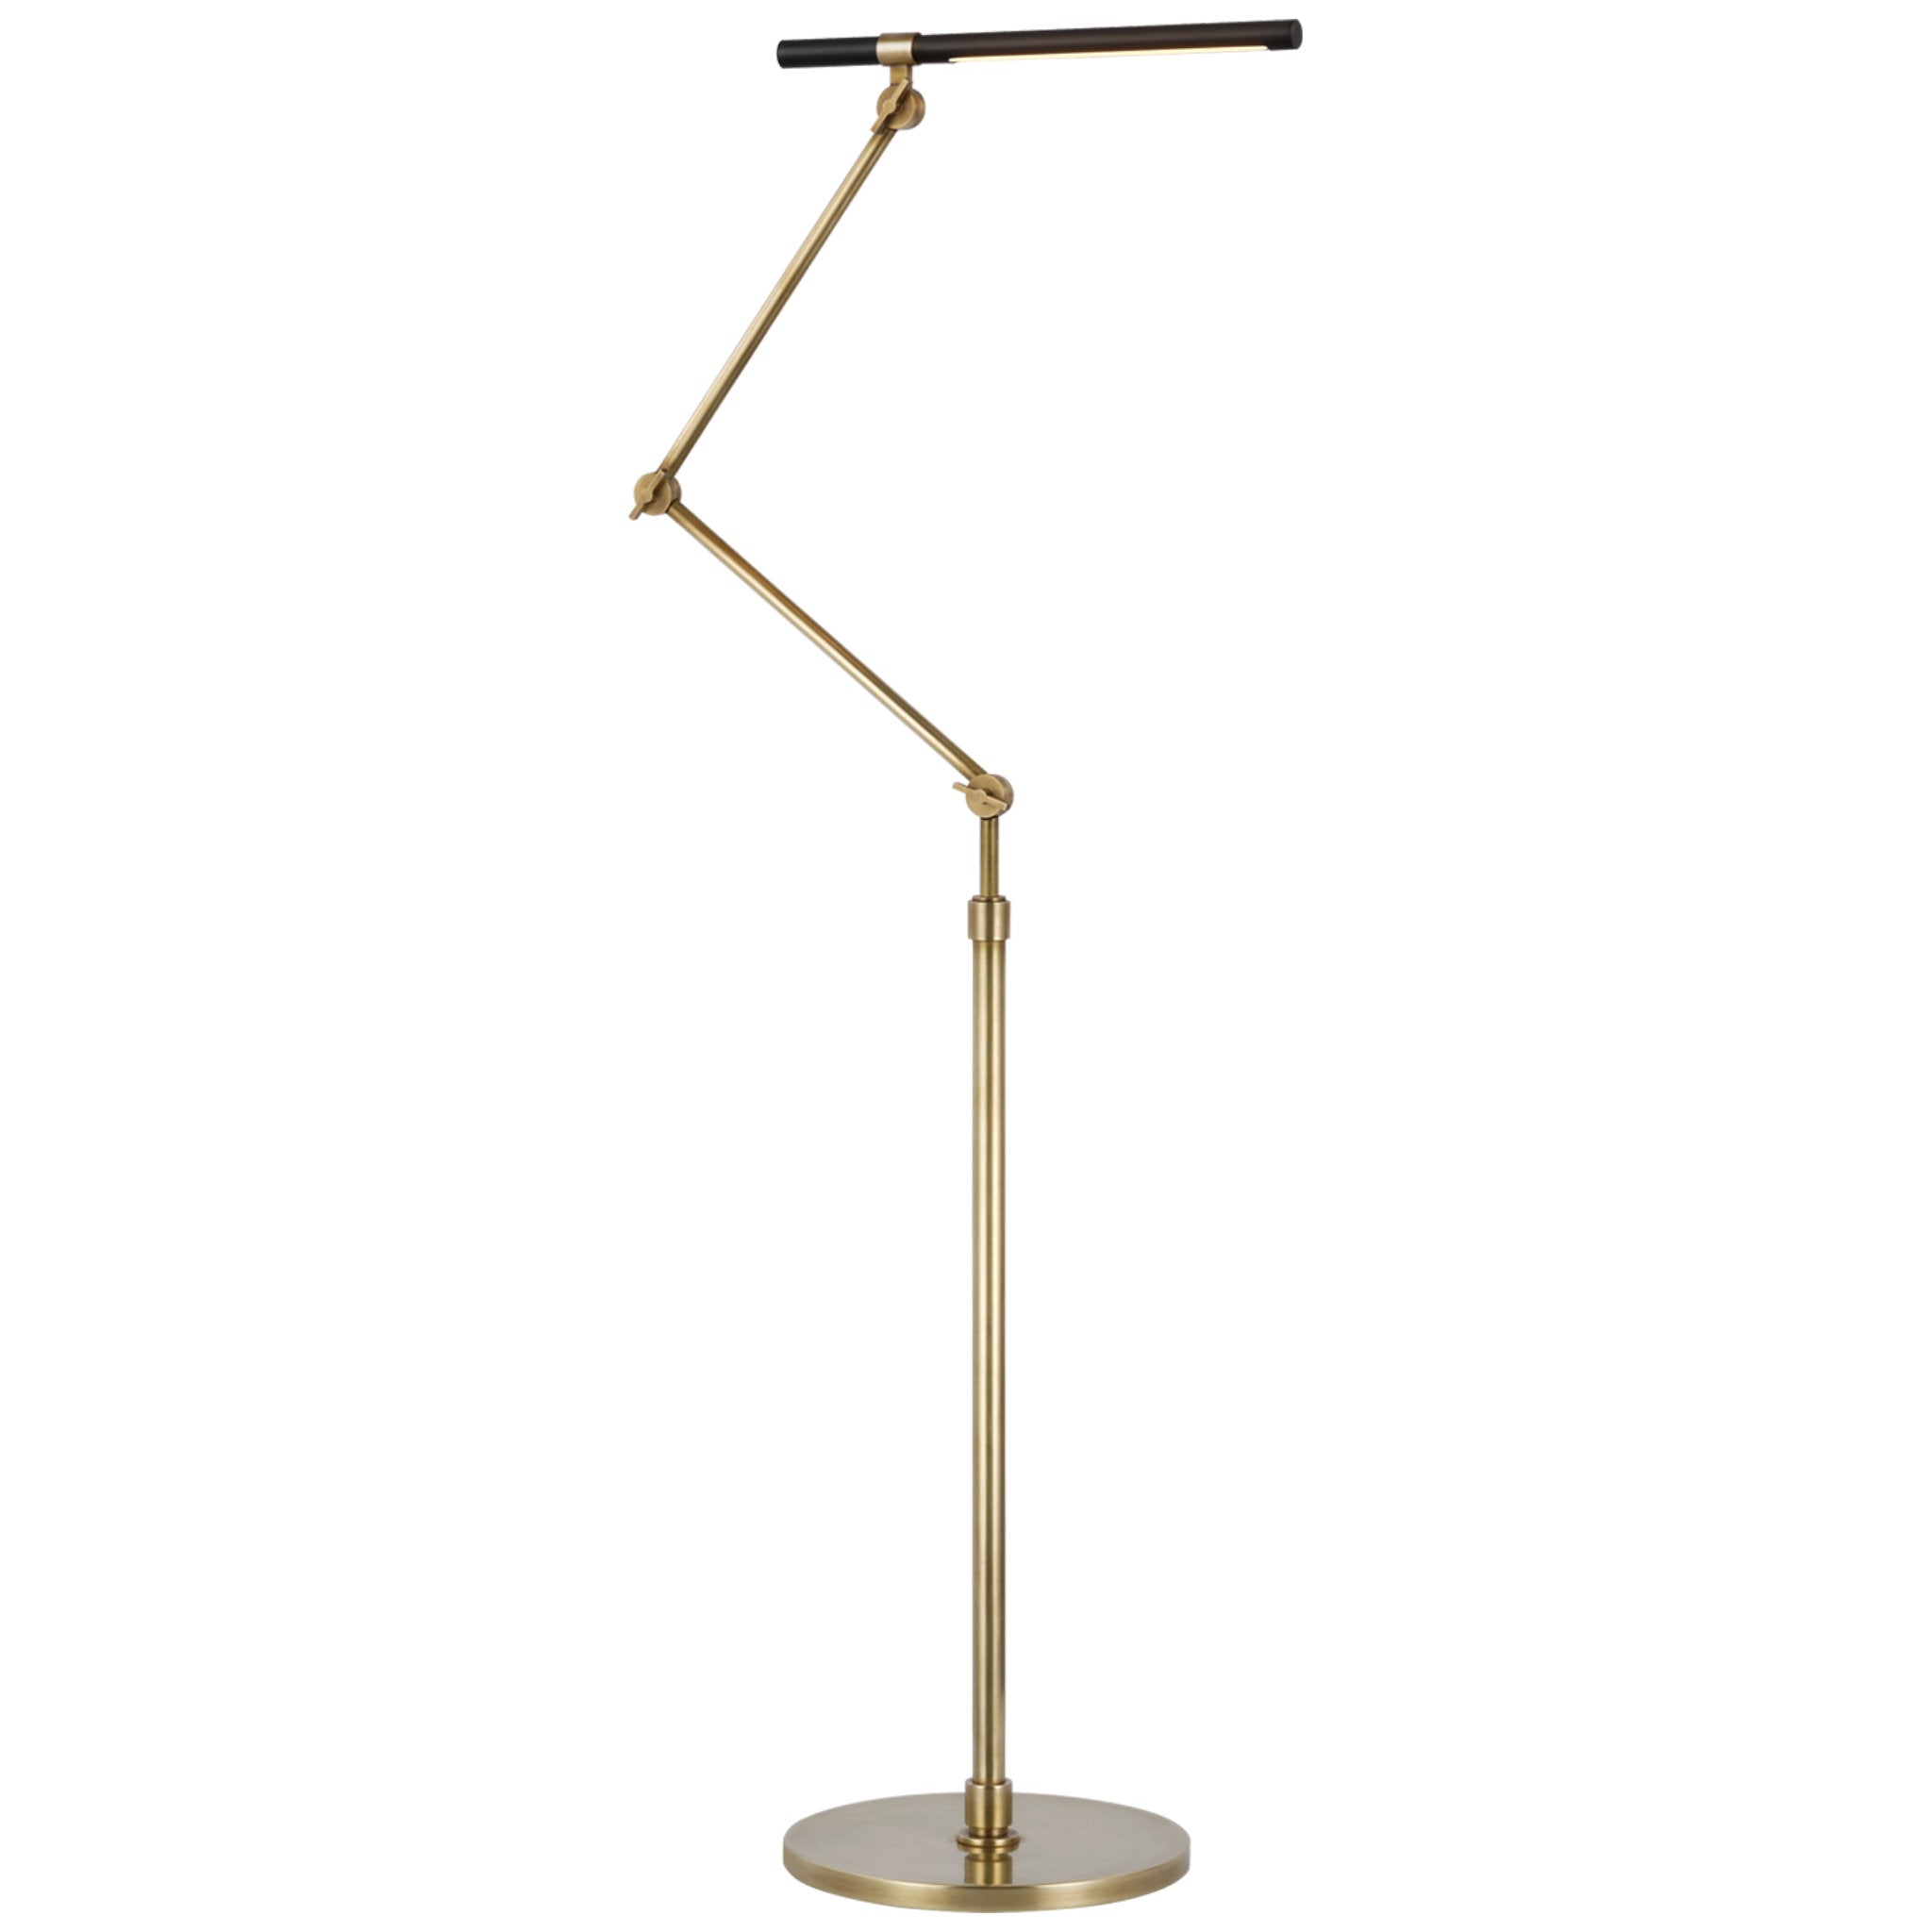 Ian K. Fowler Heron Medium Adjustable Floor Lamp in Hand-Rubbed Antique Brass and Matte Black